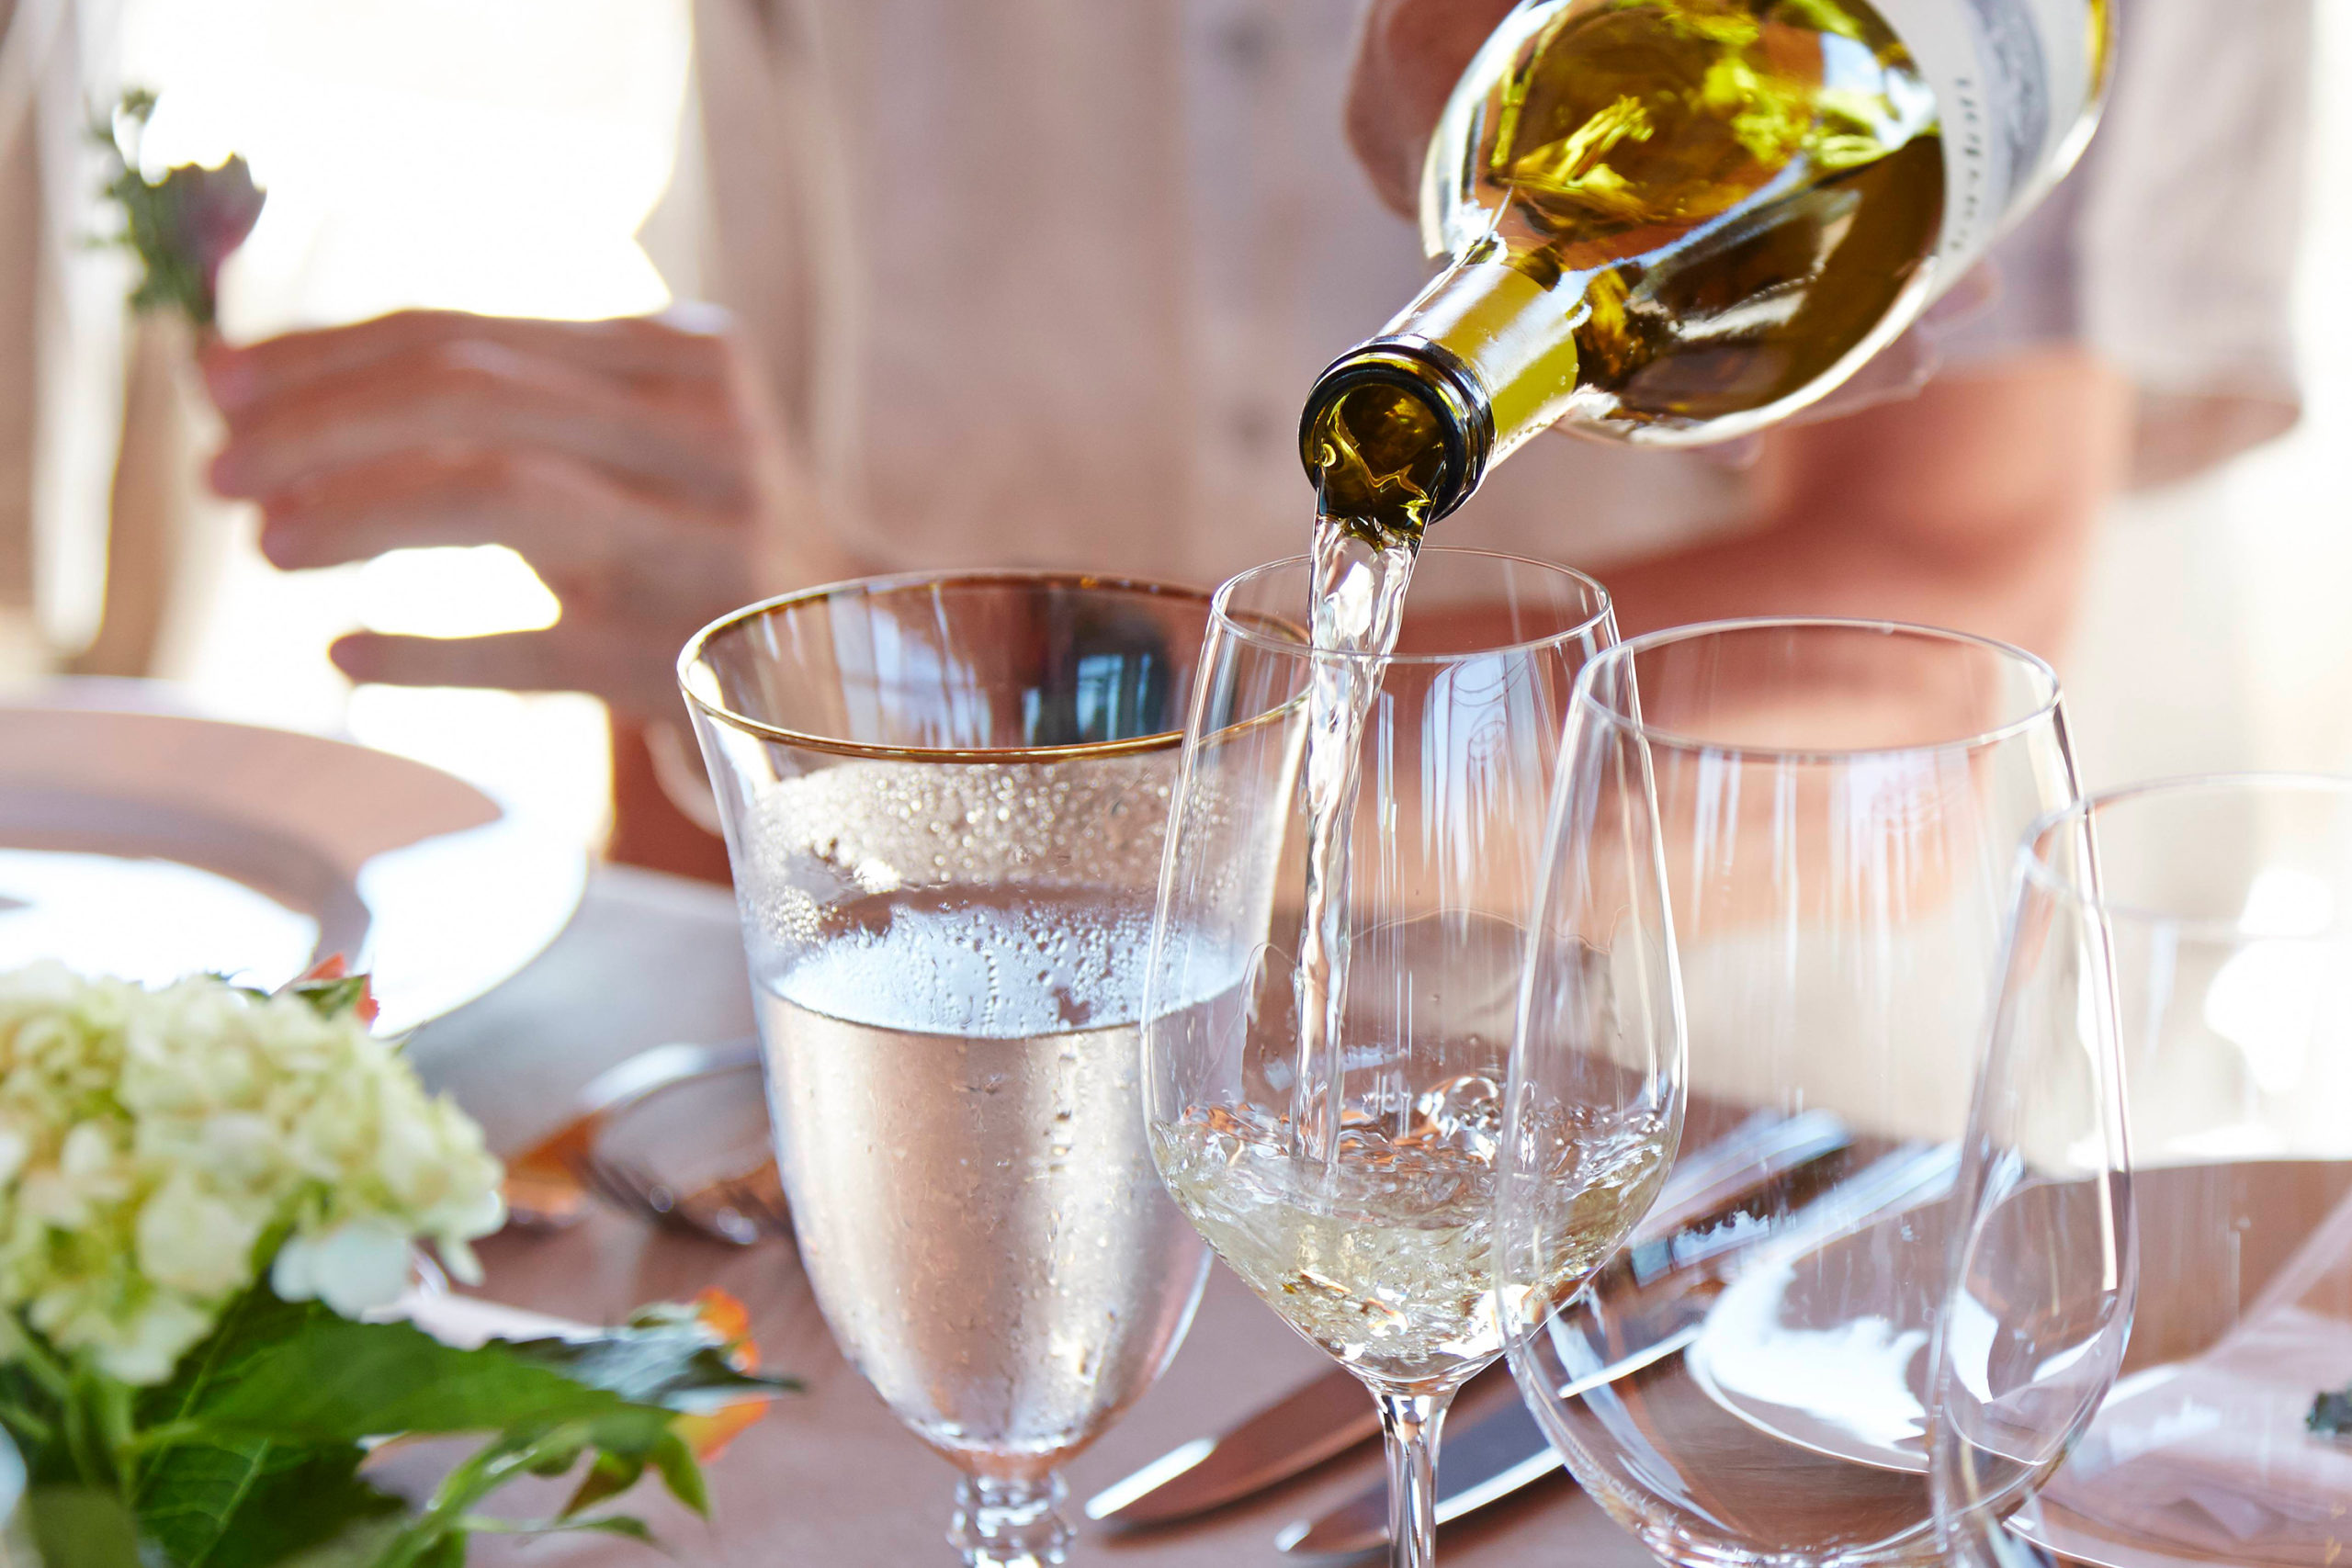 Pouring Jordan Chardonnay at a beautifully set table